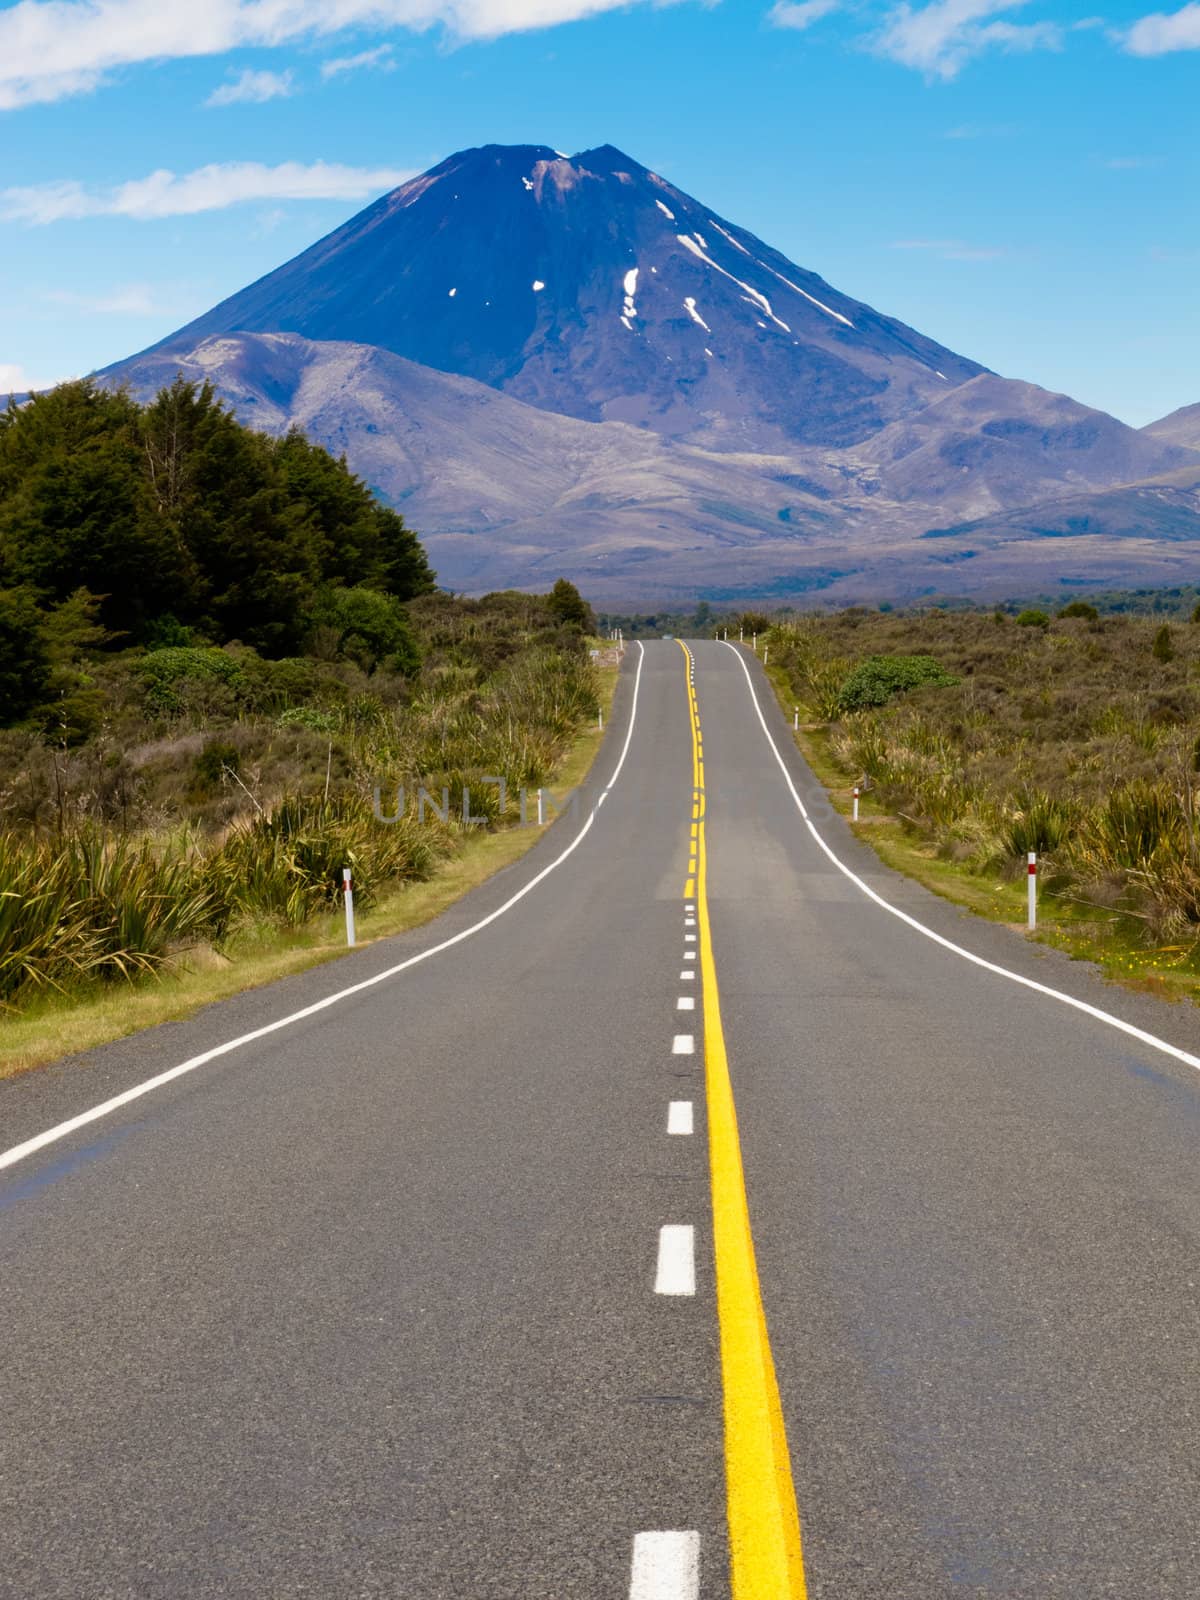 Road leading to active volcanoe Mt Ngauruhoe in NZ by PiLens